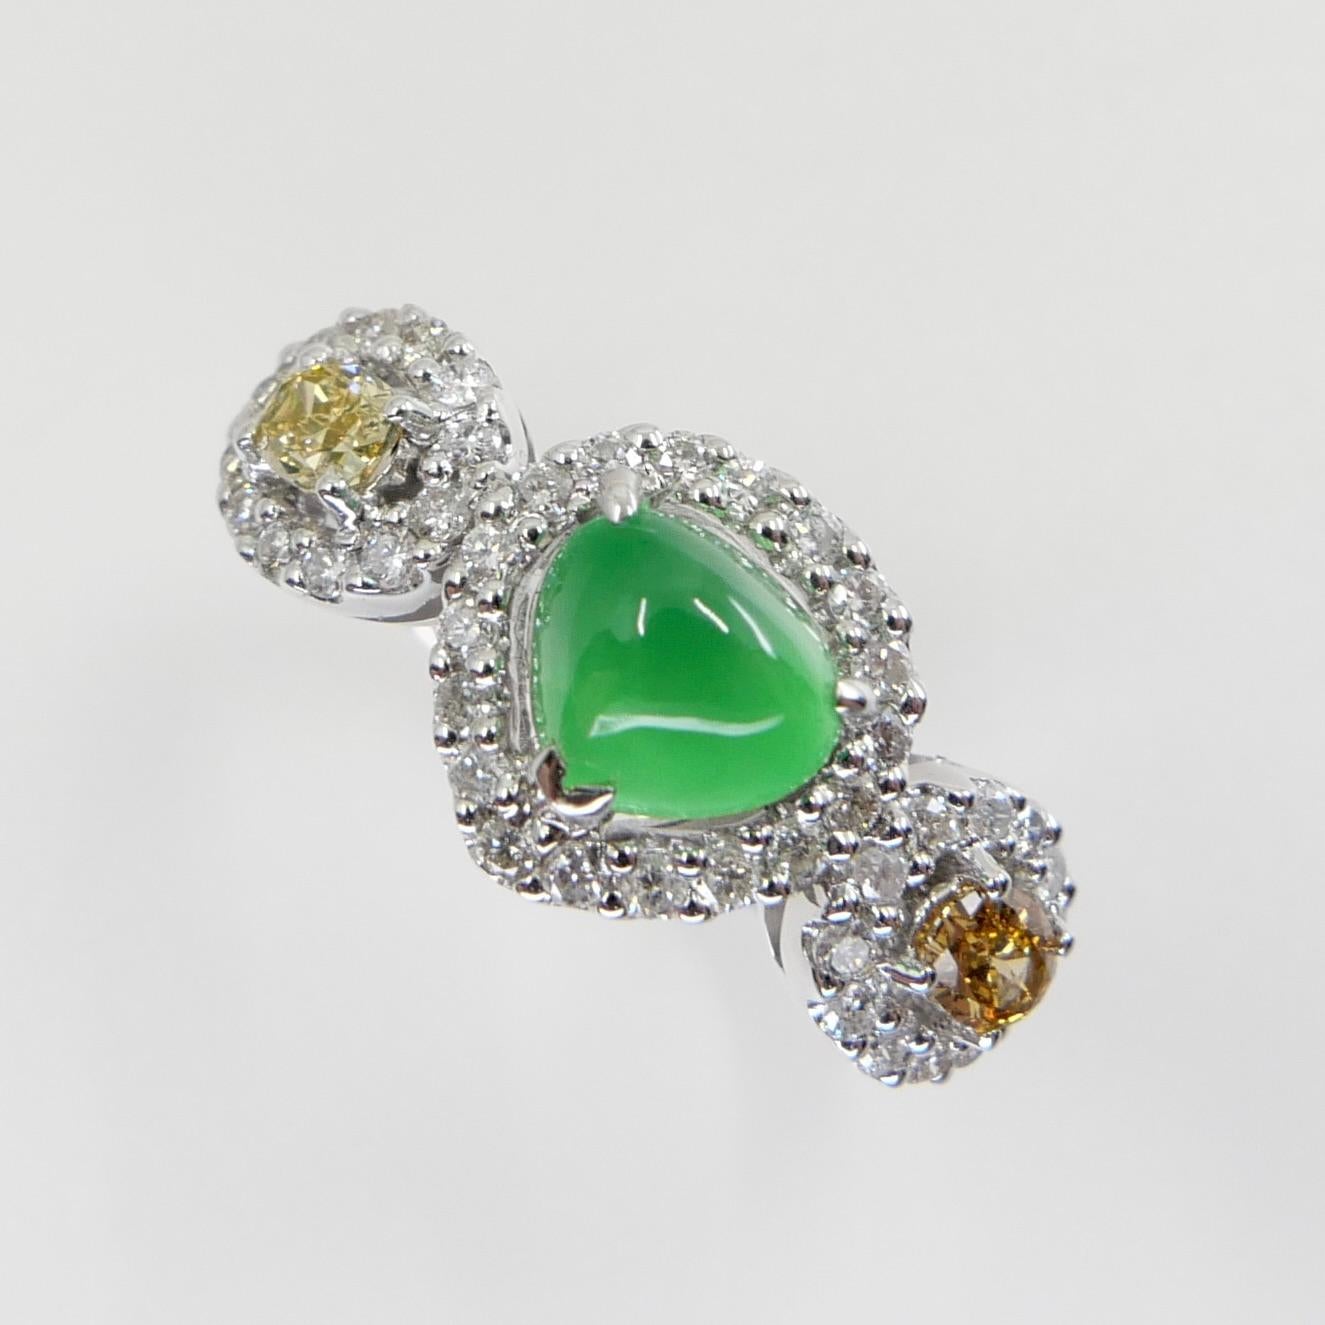 Certified Jade & Fancy Yellow Diamond Cocktail Ring, Glowing Apple Green Jade For Sale 3